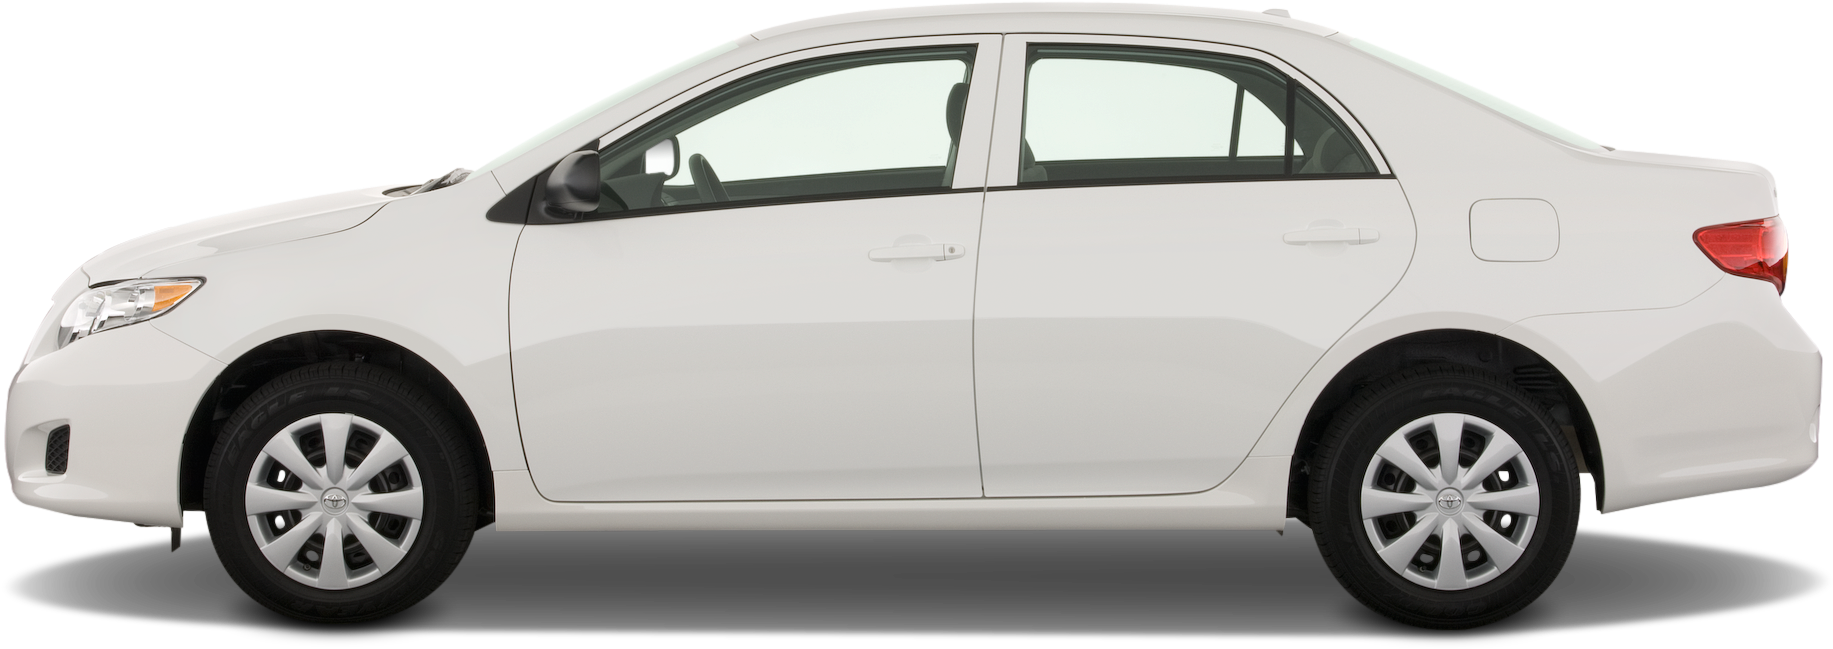 25 - - 2009 White Toyota Corolla Sedan Clipart (2048x1360), Png Download